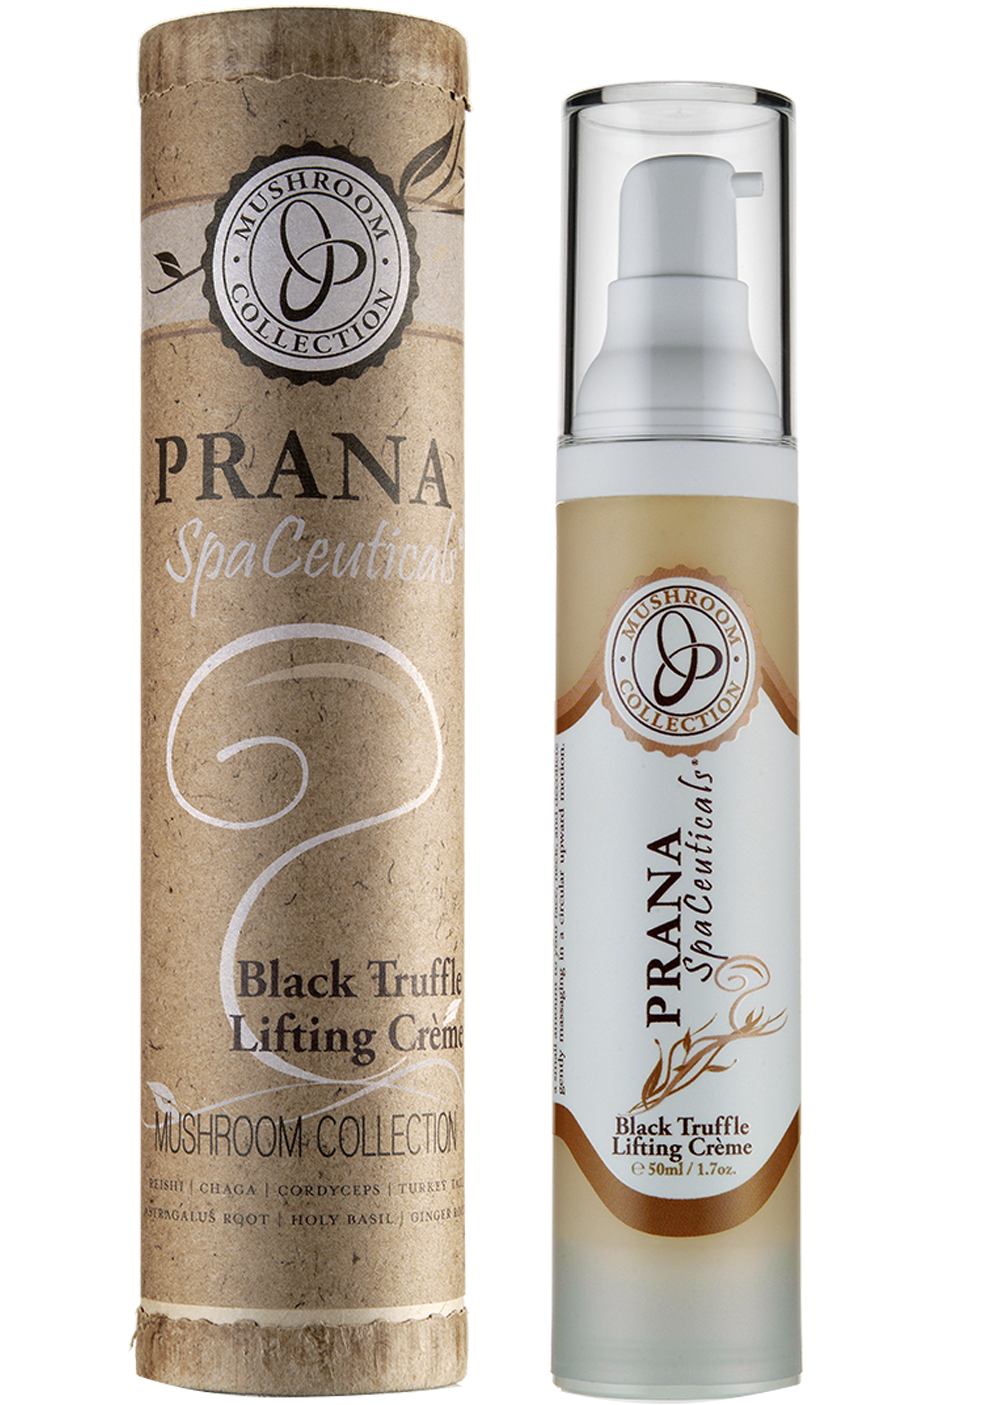 Prana SpaCeuticals Mushroom Collection Black Truffle Lifting Creme 1.7oz - European Beauty by B